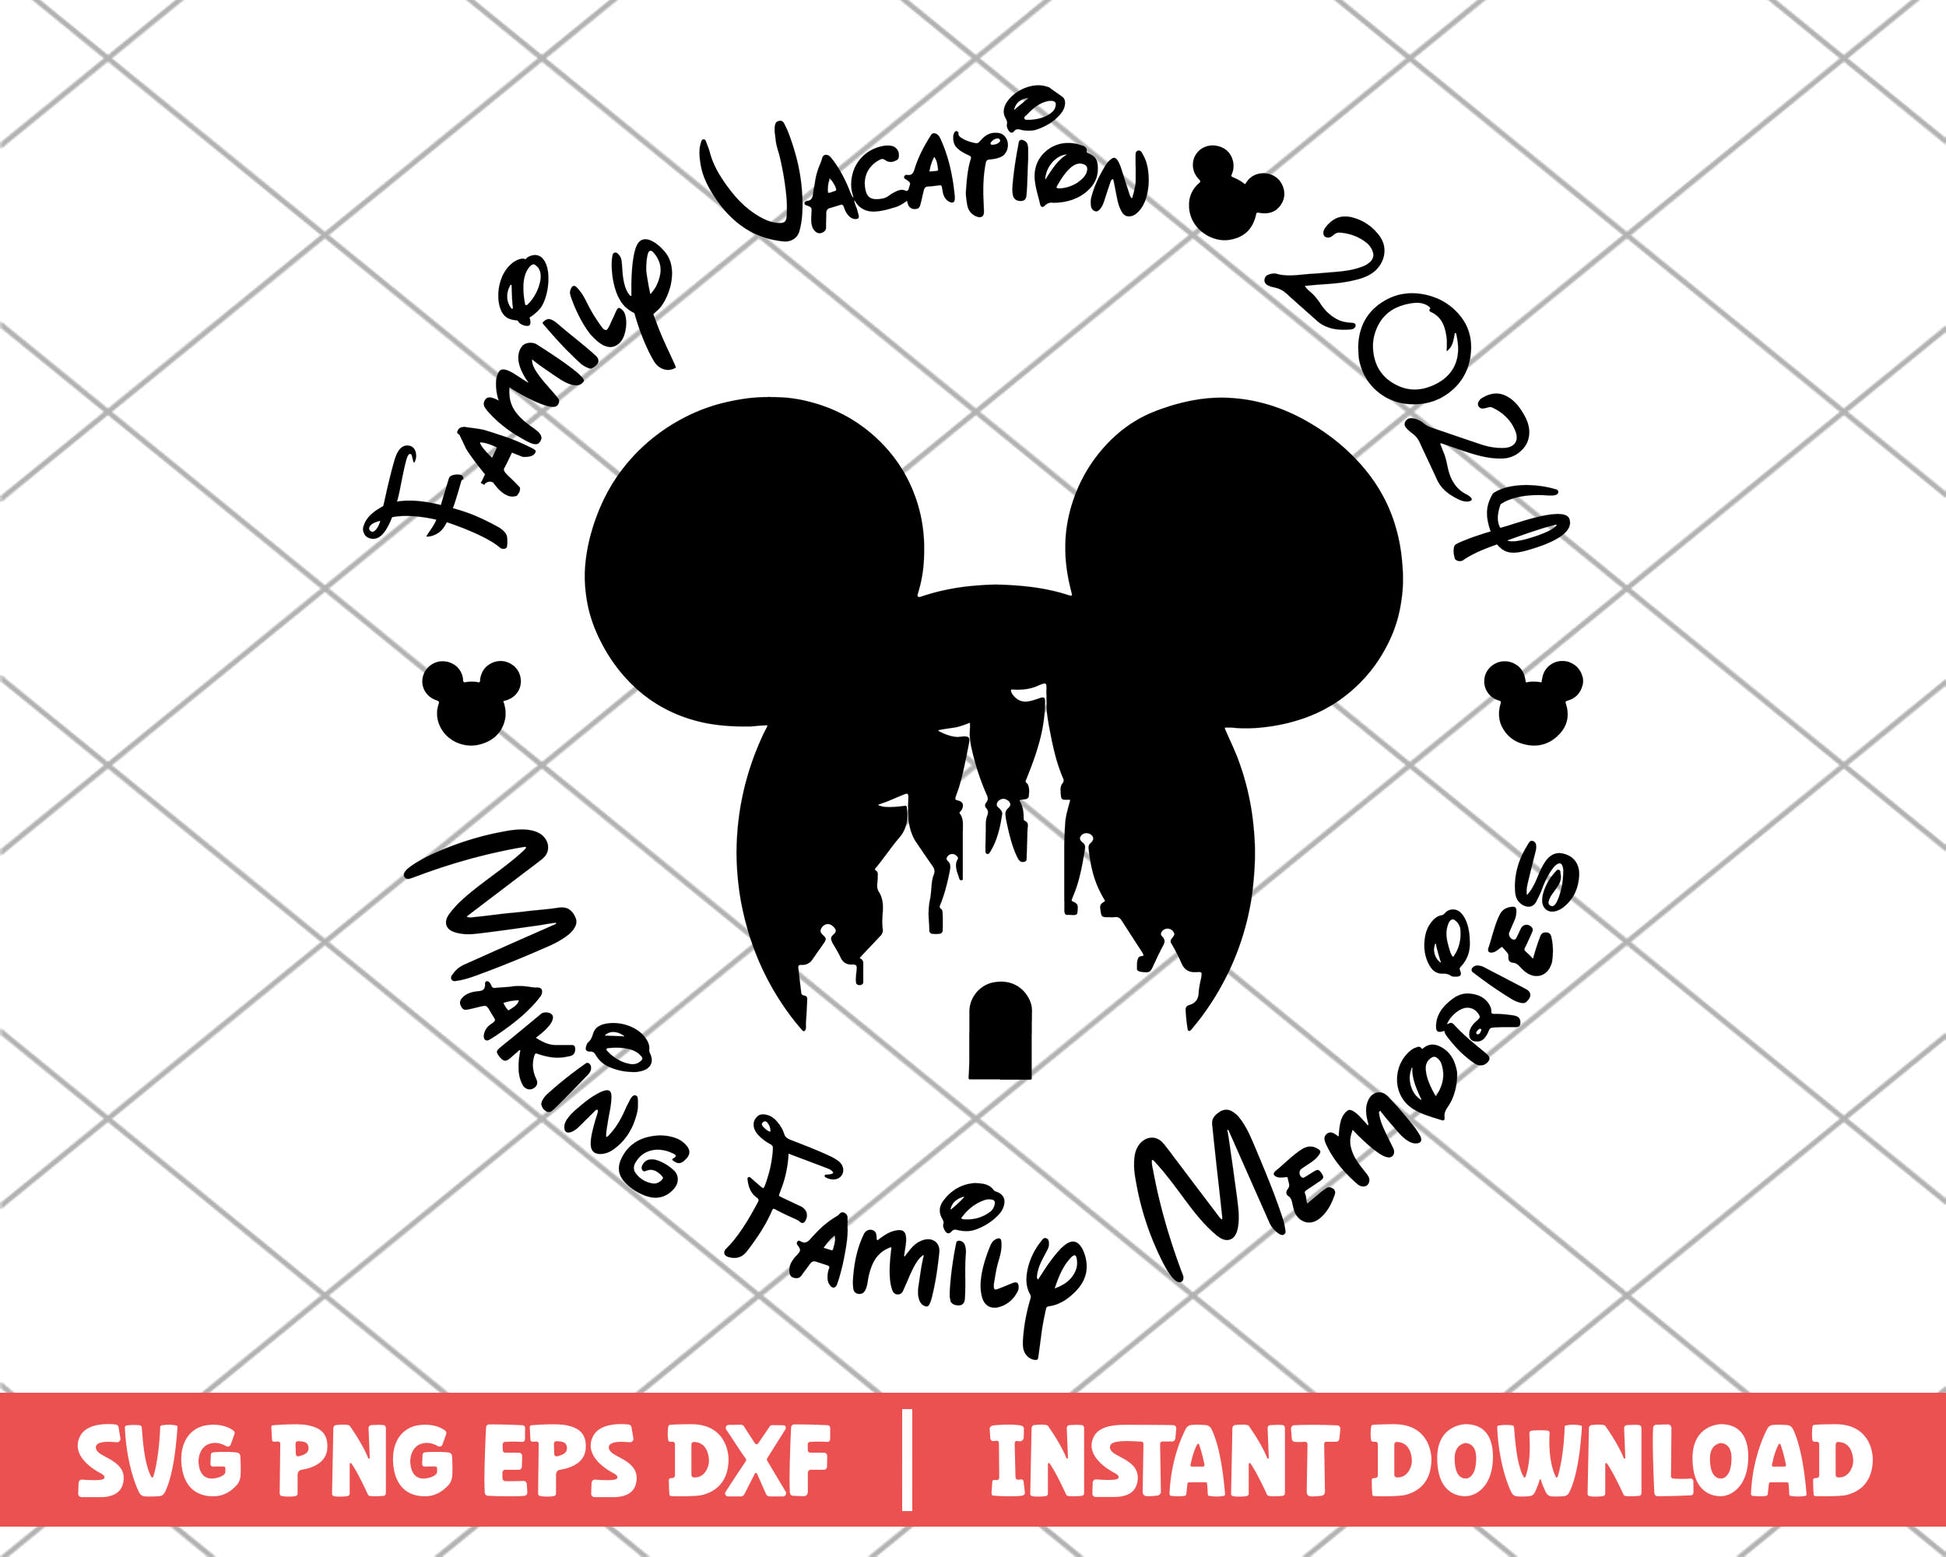 Mickey family vacation making family memories svg